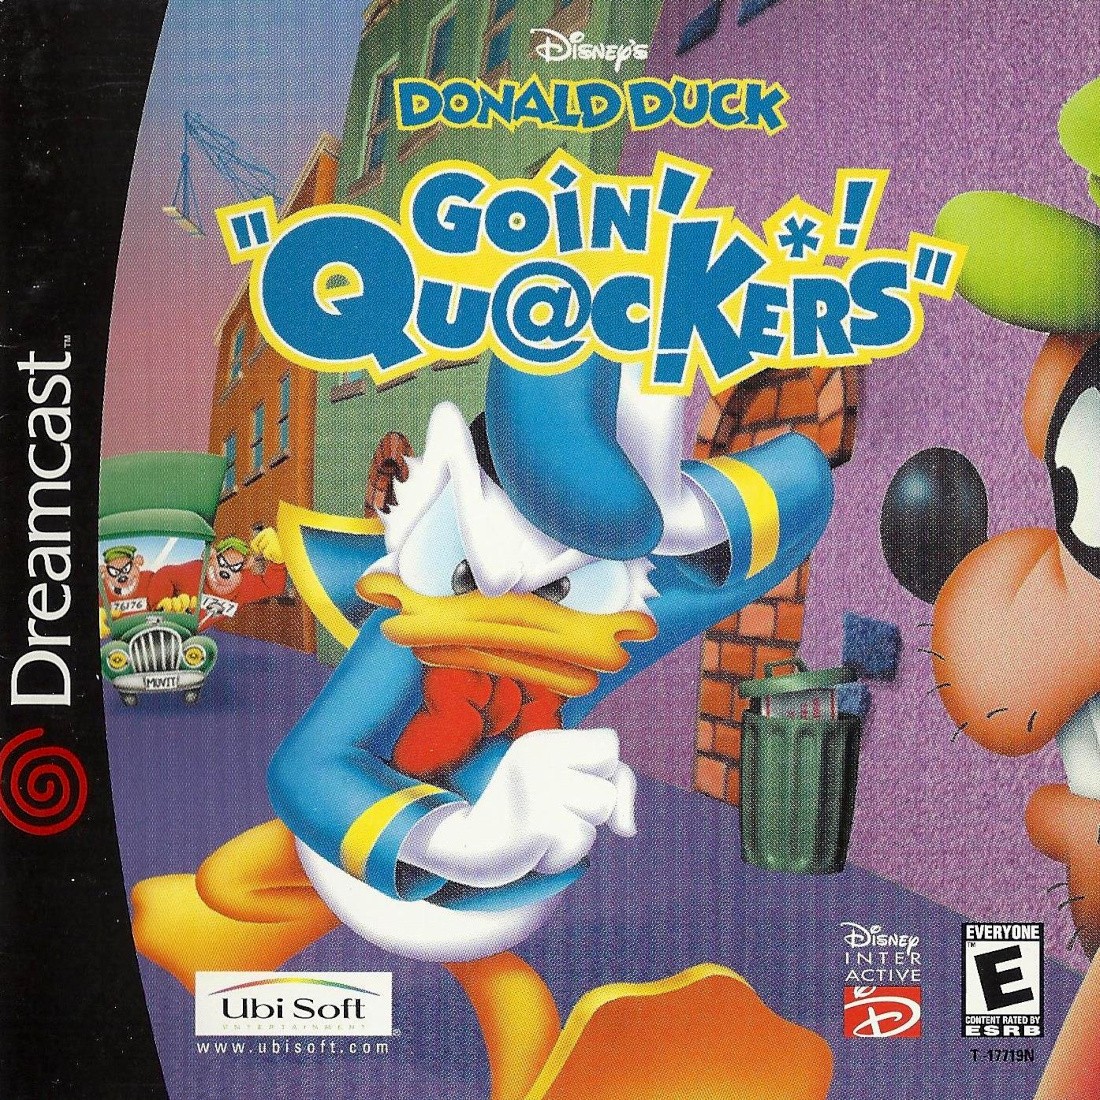 Disneys Donald Duck Goin Quackers cover